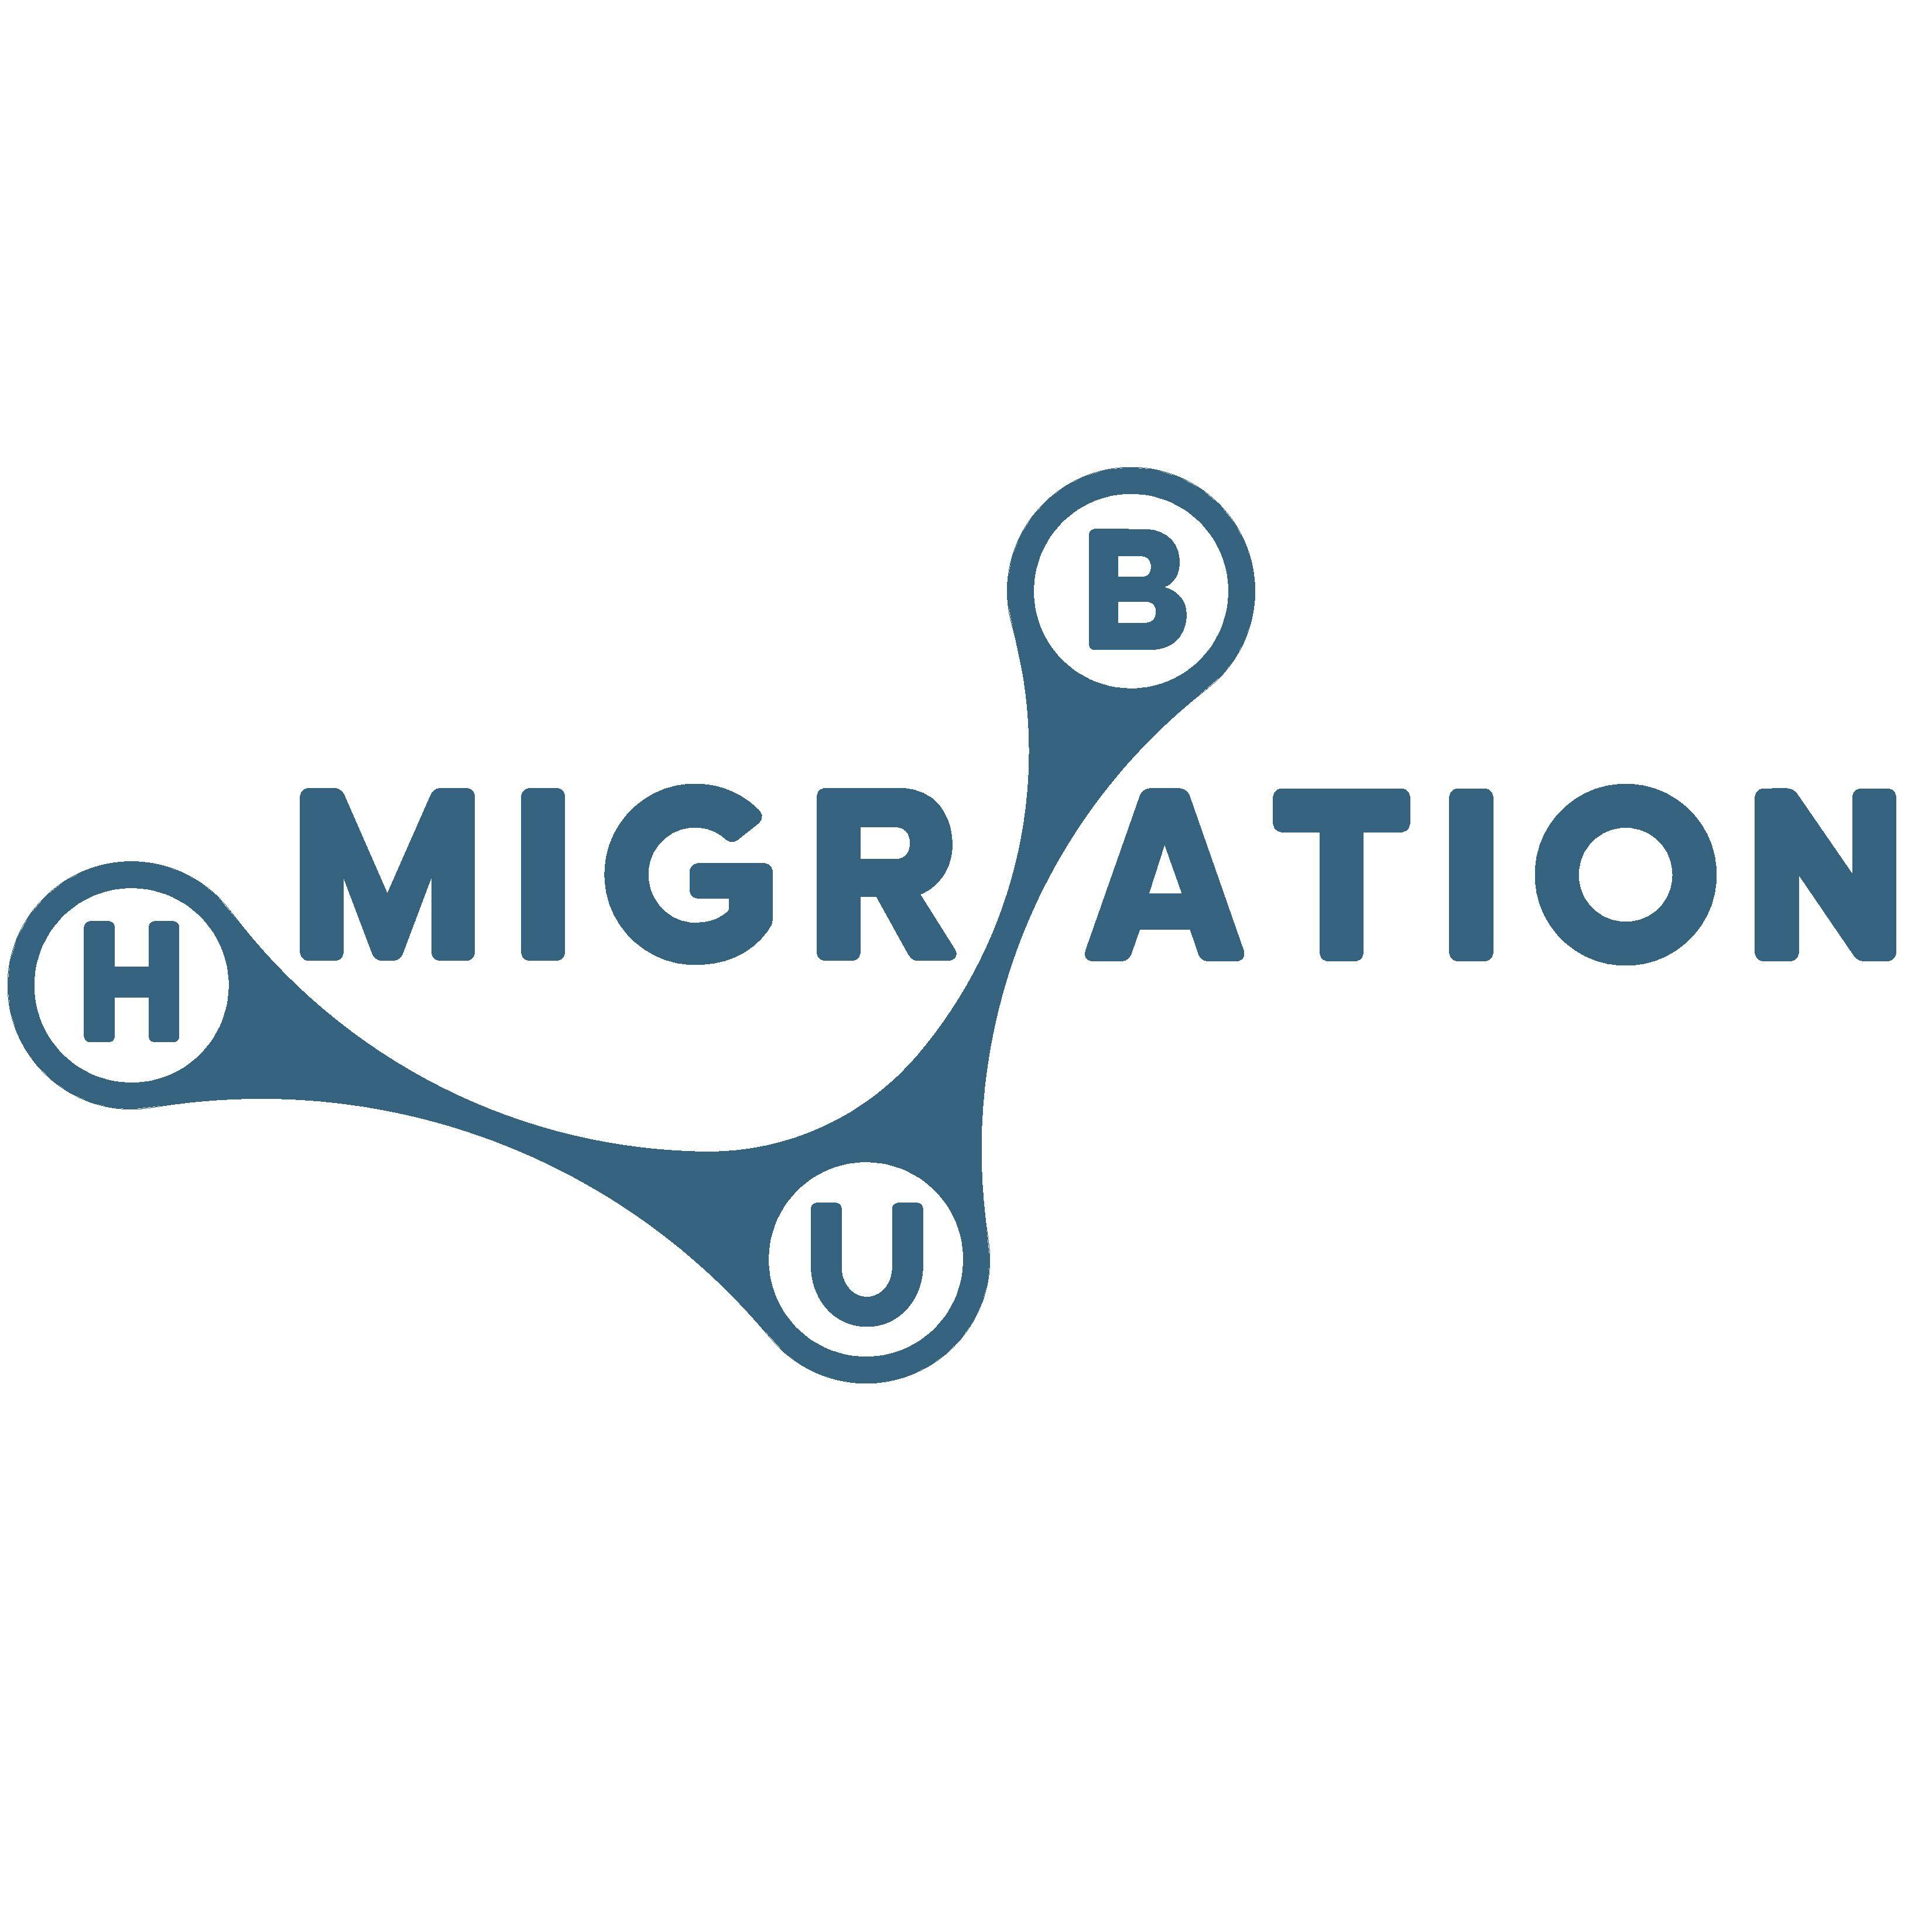 Hub Network Logo - Migration Hub Network